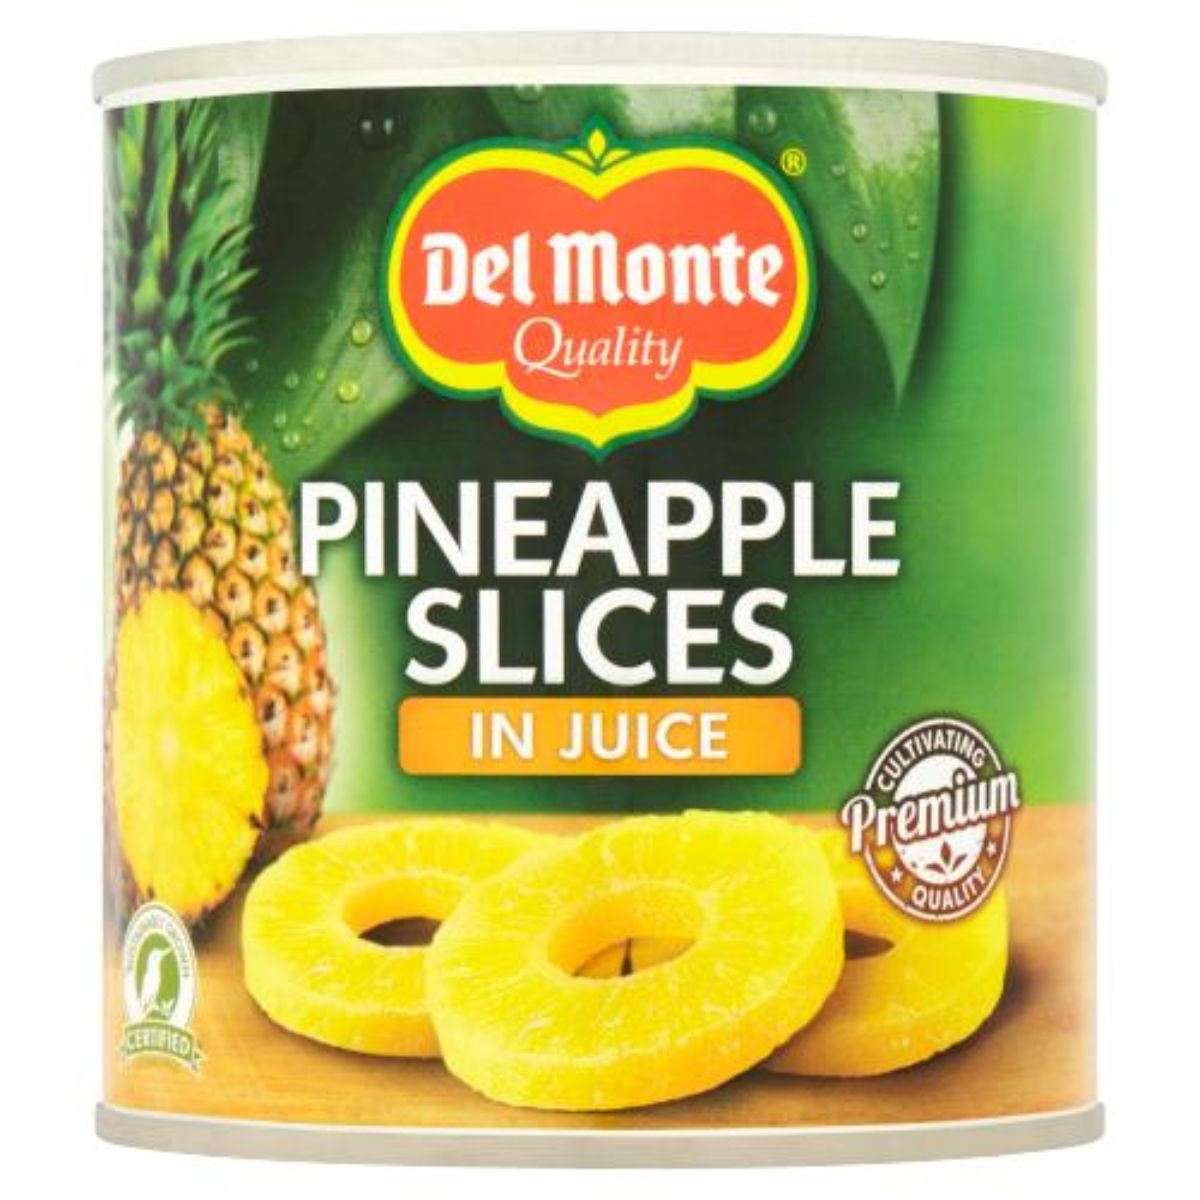 Del Monte - Pineapple Slices - 425g in juice.